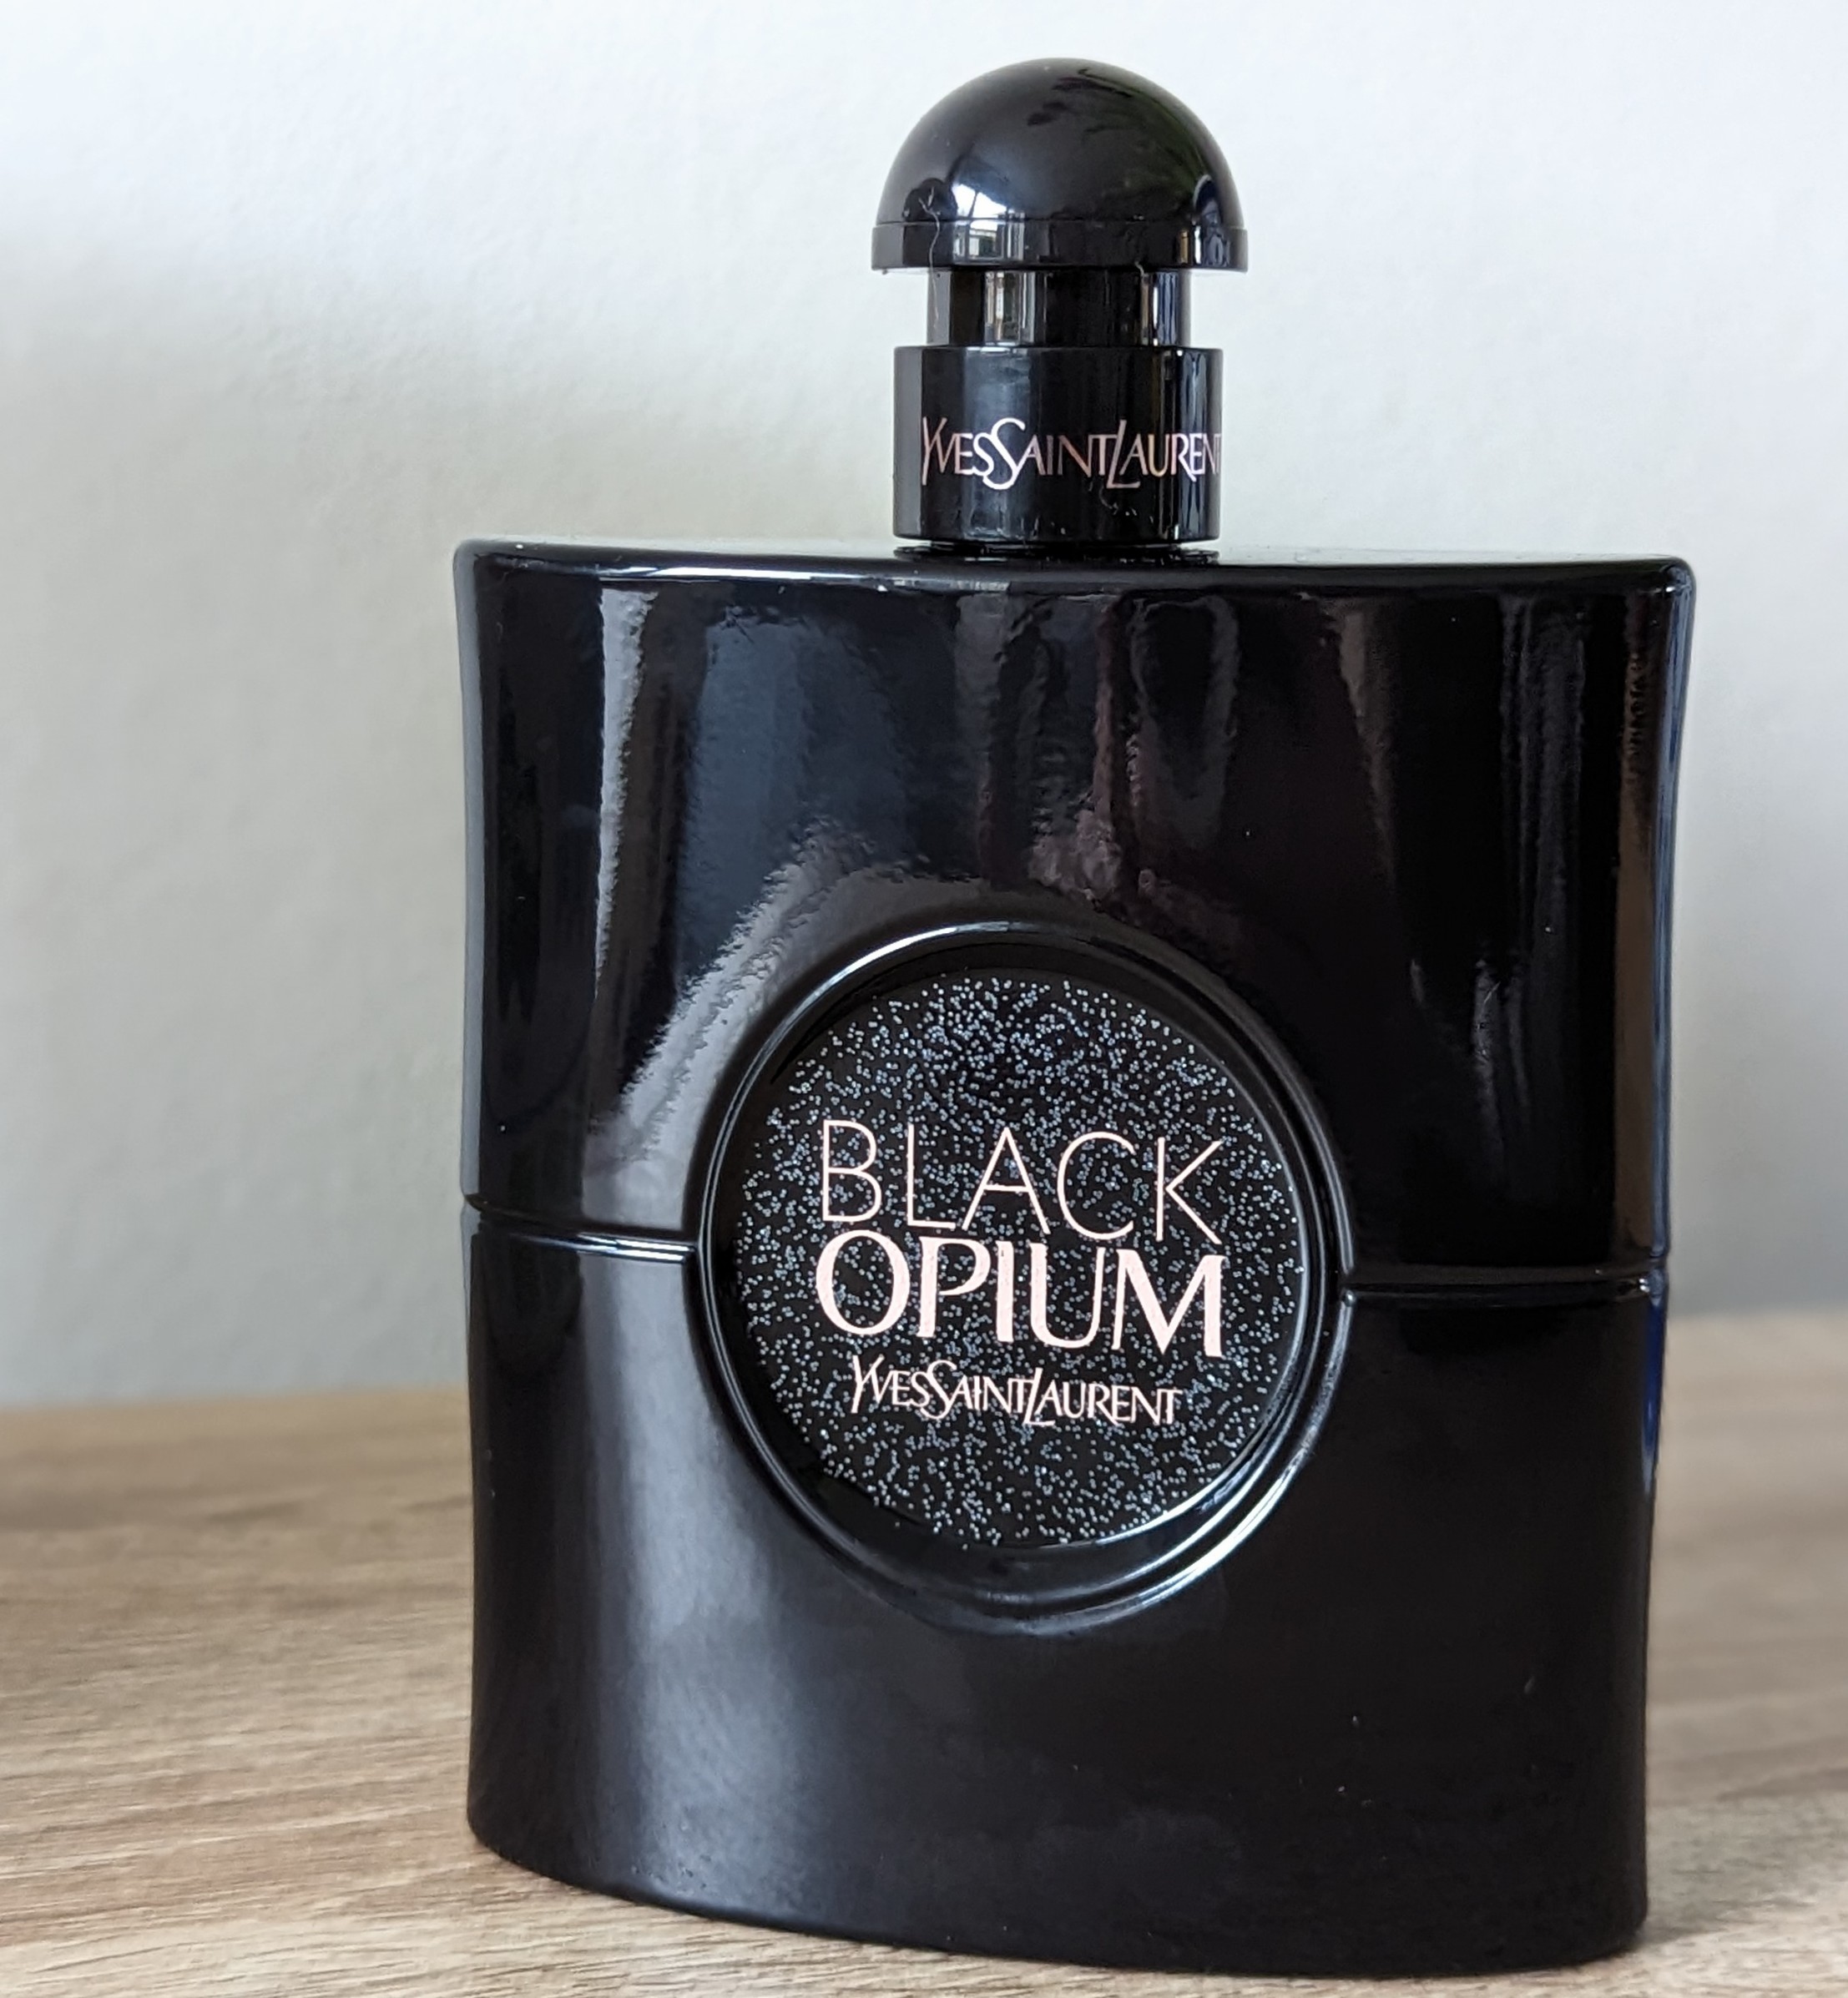 Lippy in London : YSL Black Opium Le Parfum